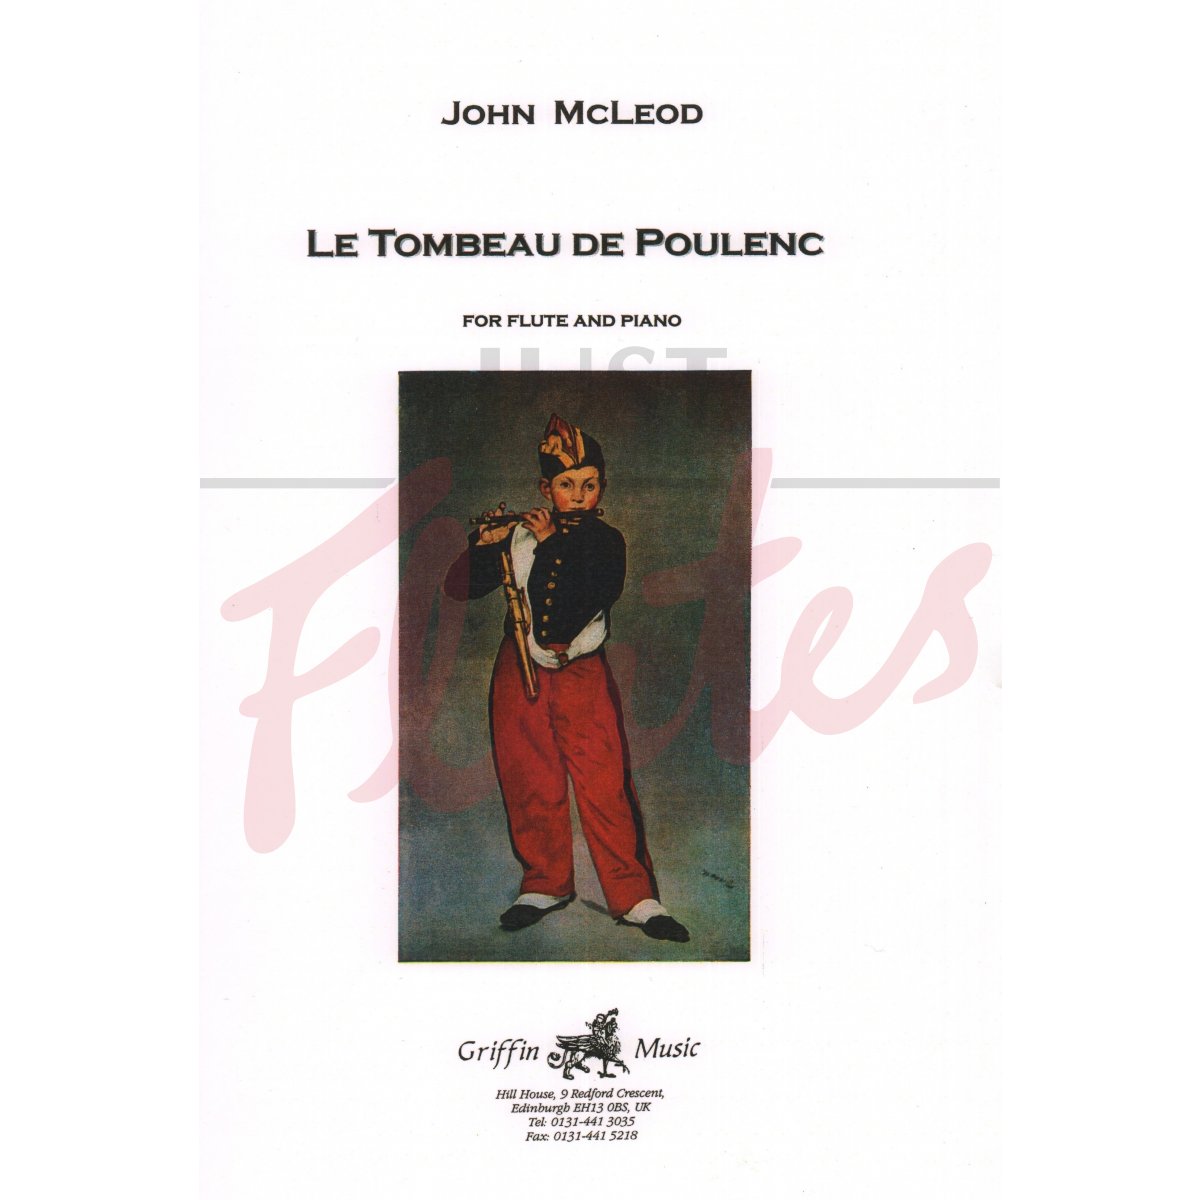 Le Tombeau de Poulenc for Flute and Piano